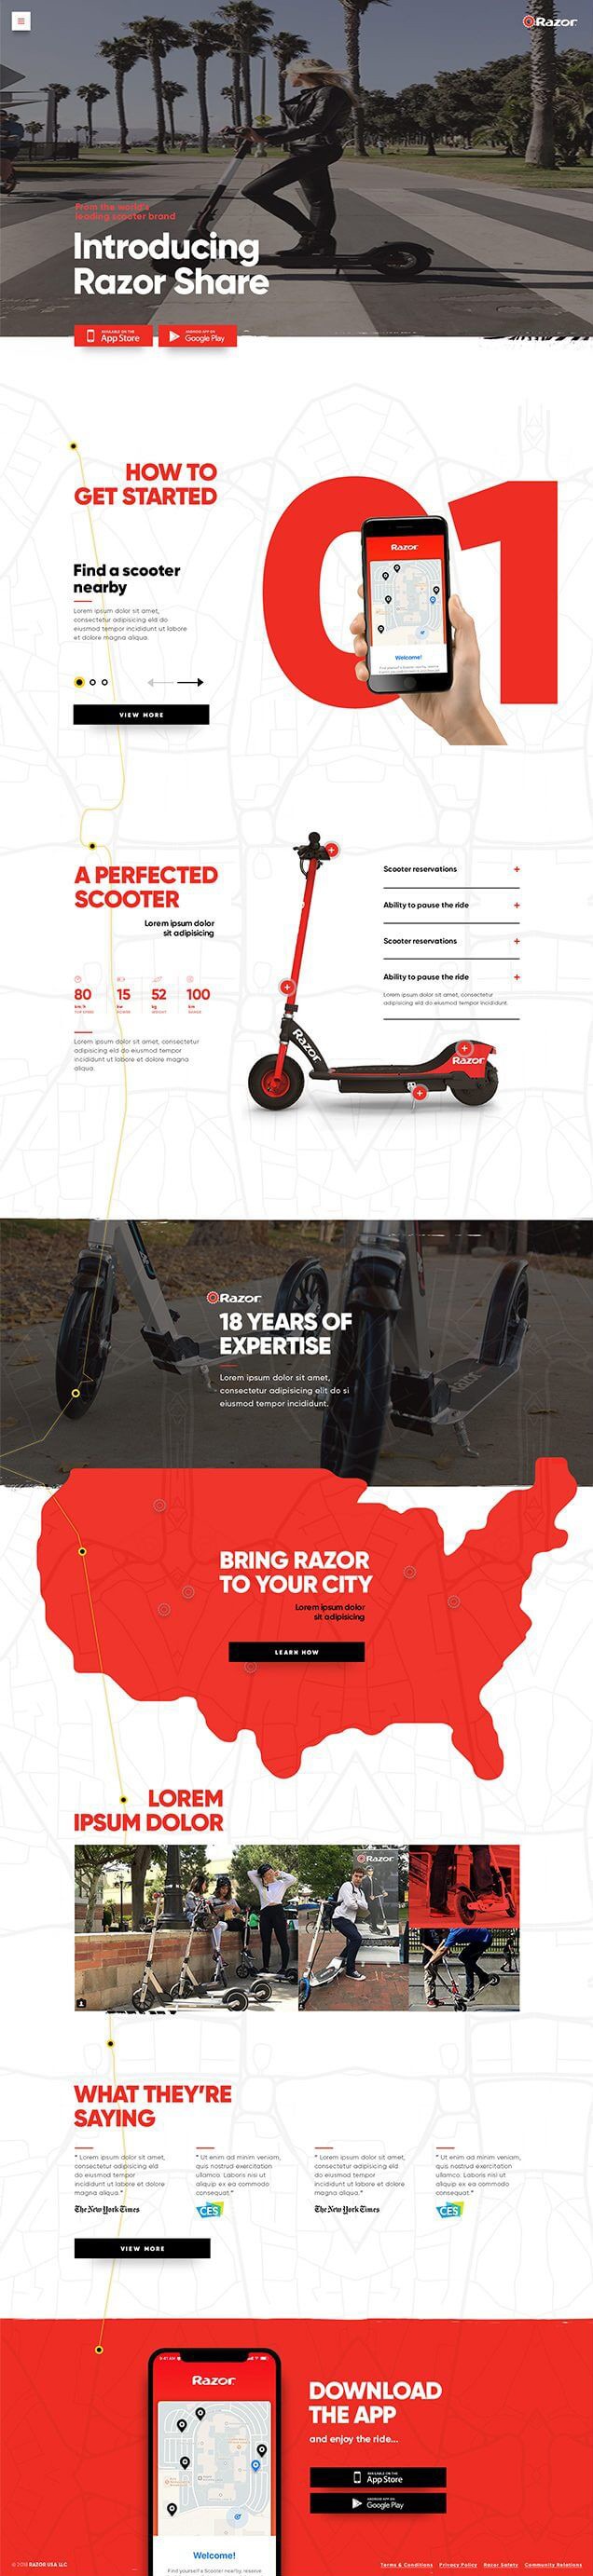 ecommerce-website-design-collaboration-of-razor-and-isadora